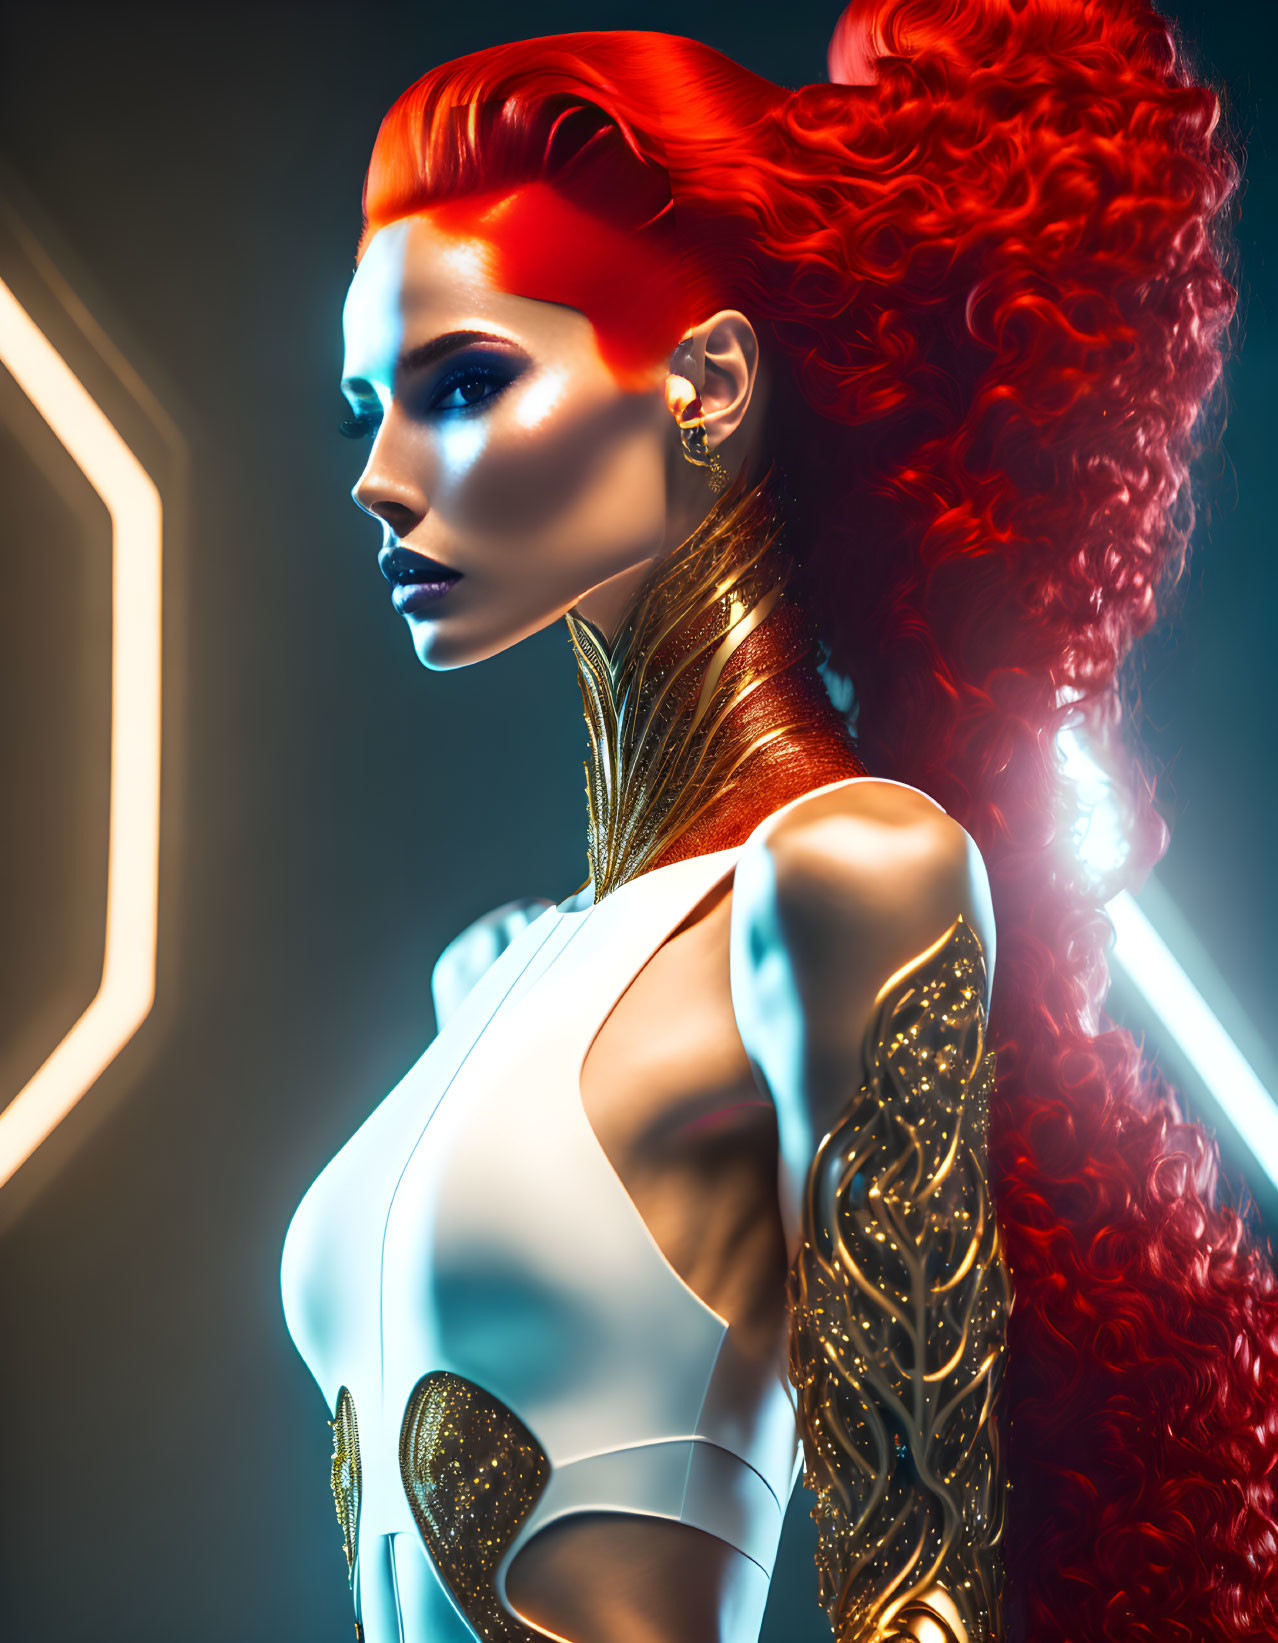 Sexy Red Hair Woman by: HeadInAJar